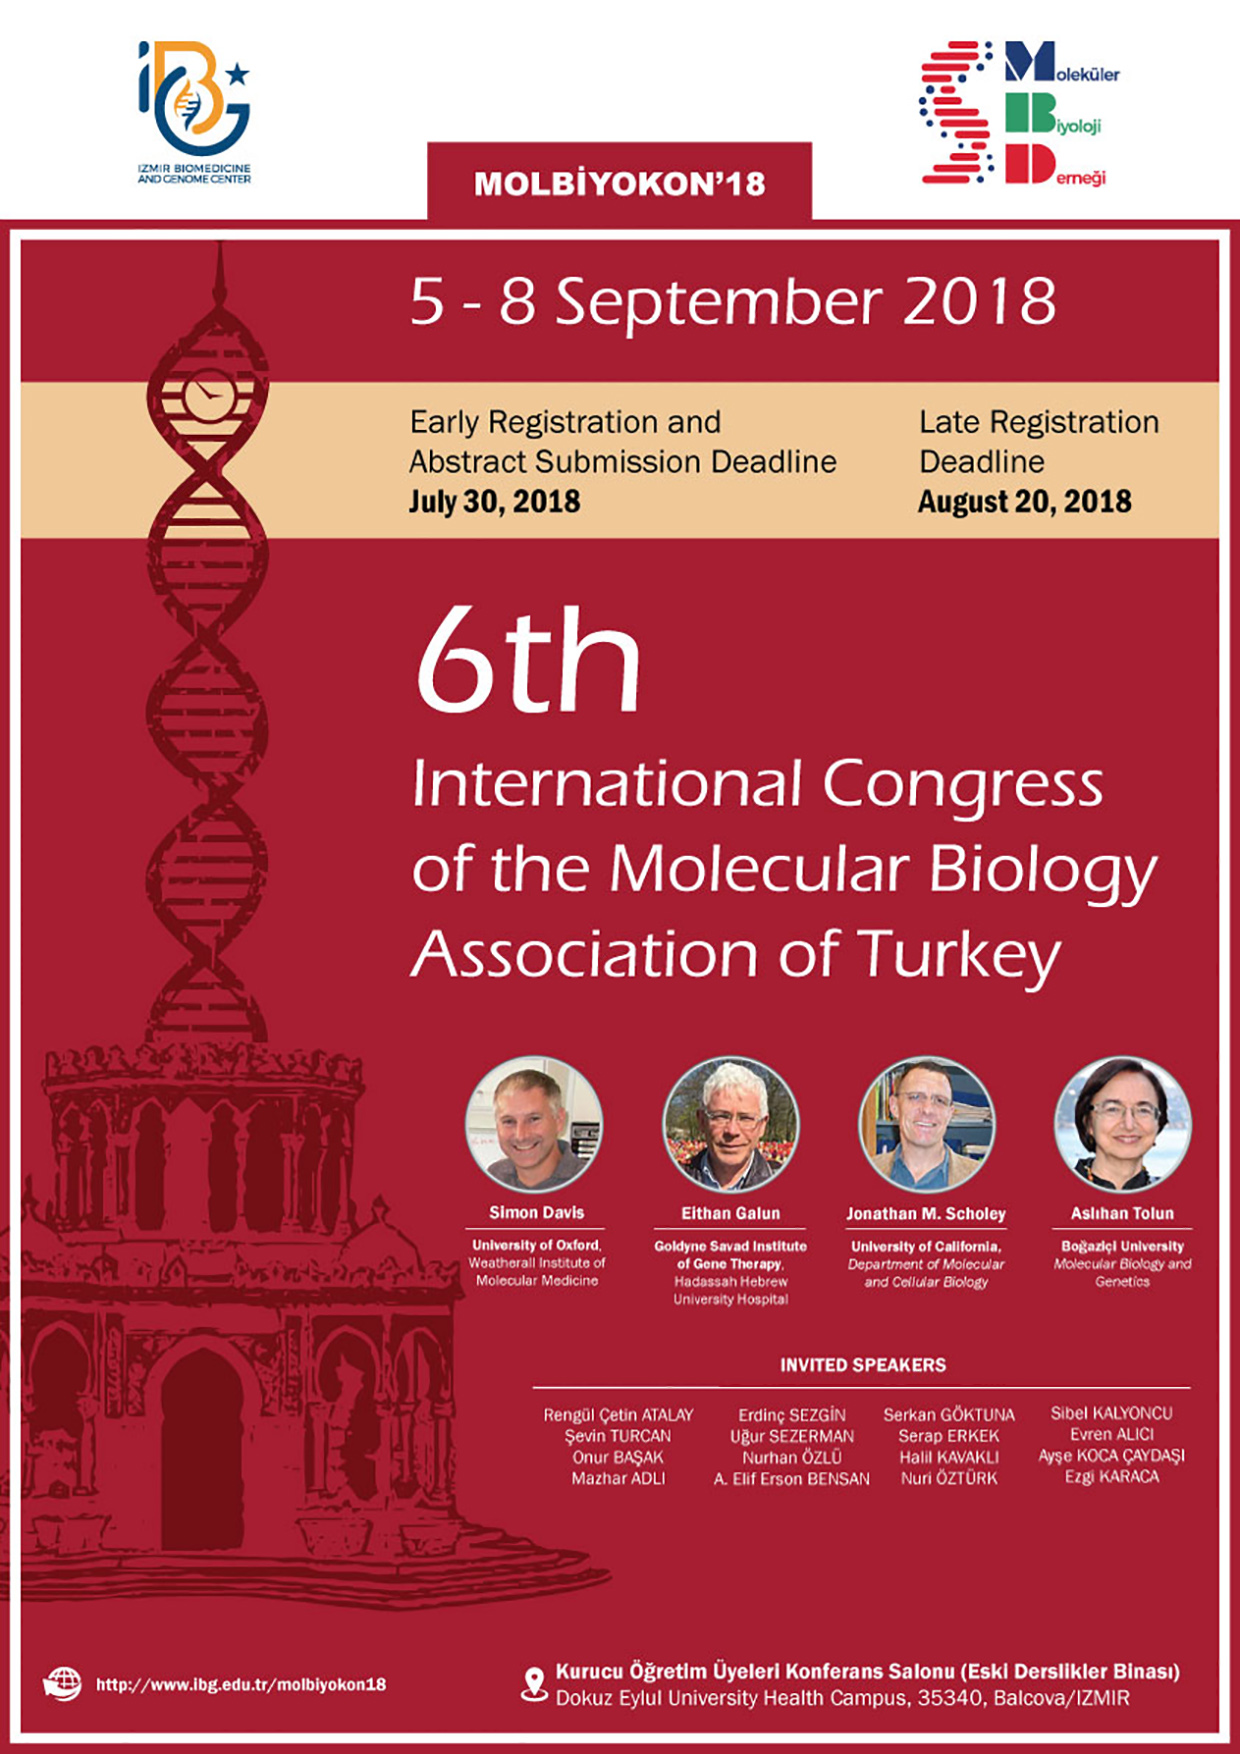 6th International Congress of the Molecular Biology Association of Turkey (MolBiyoKon)